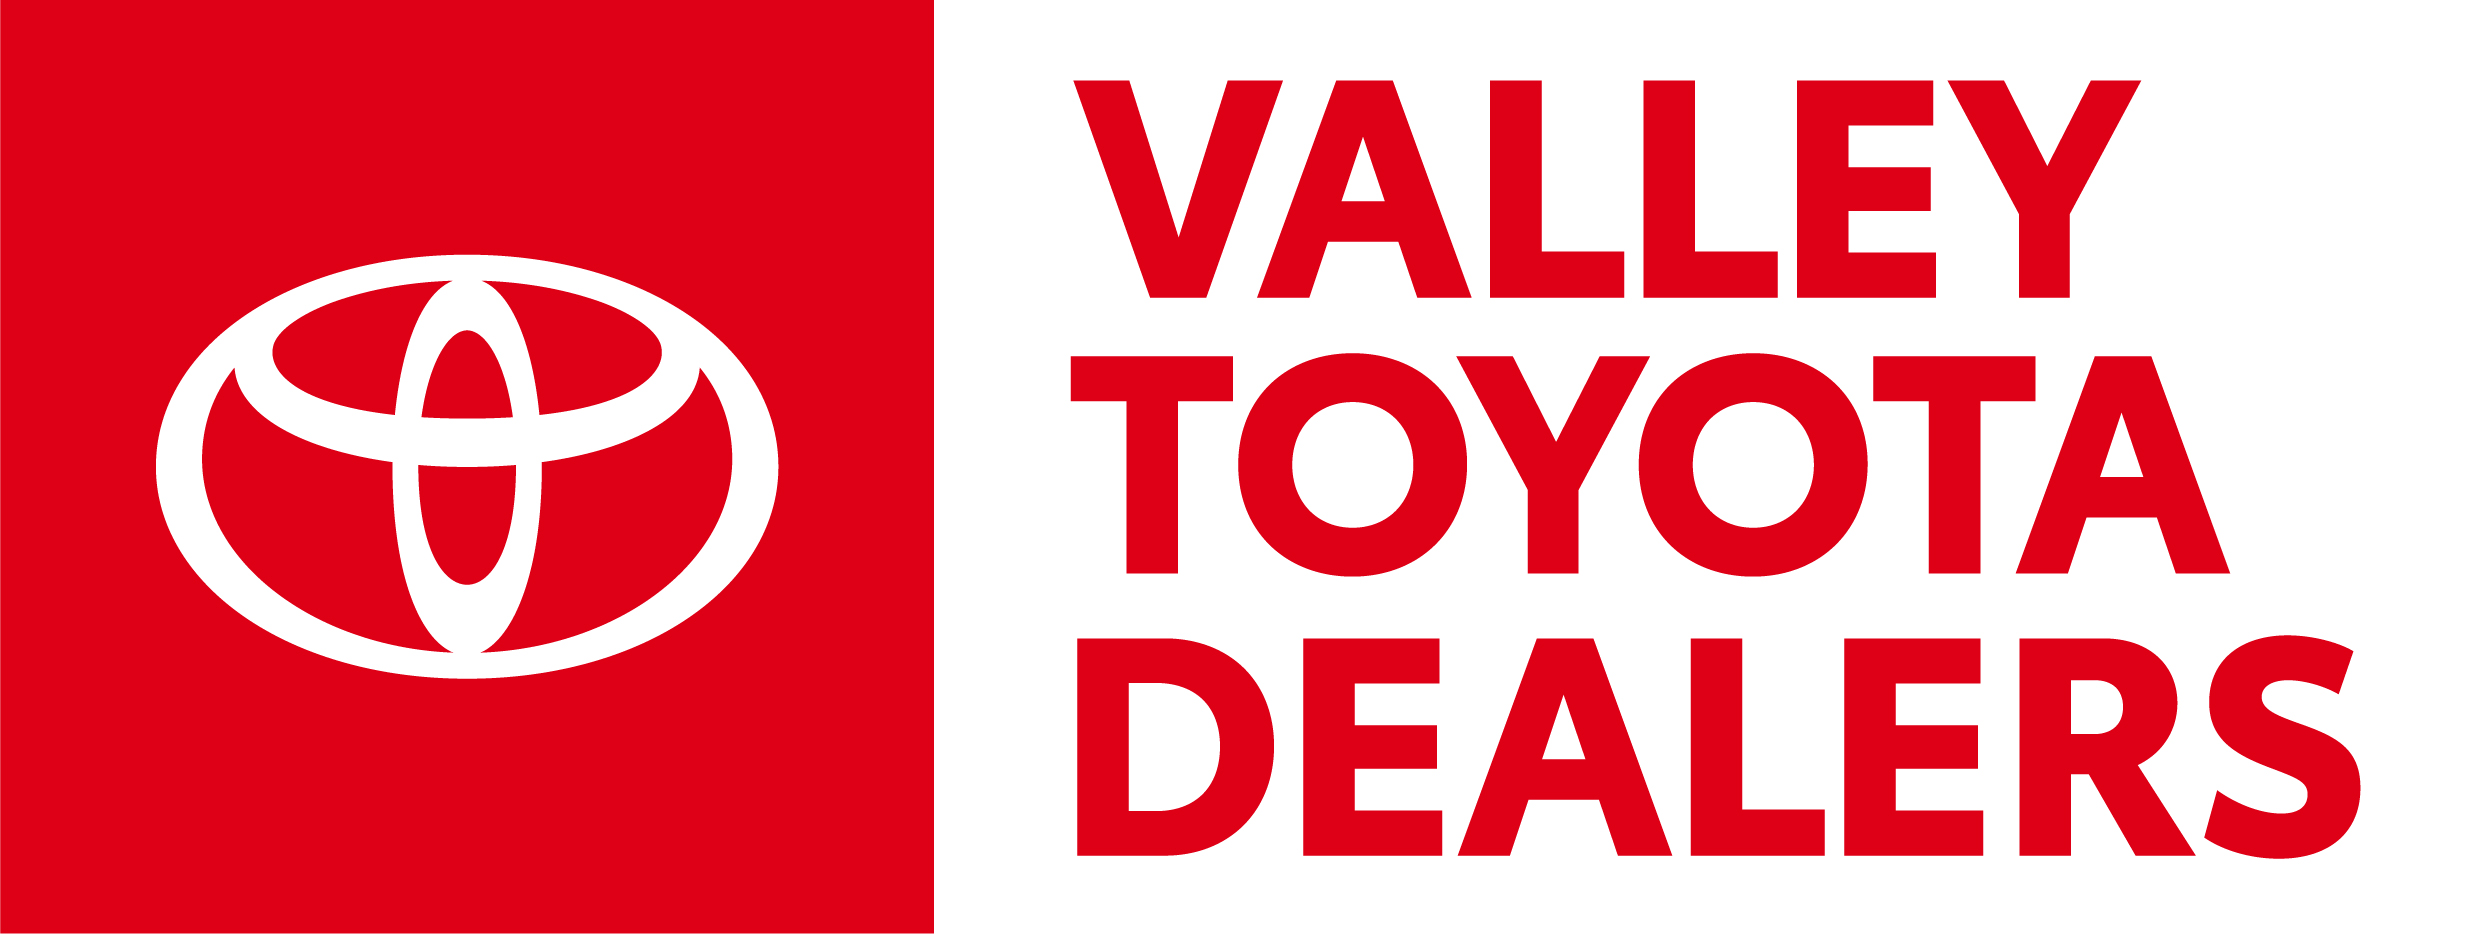 Valley Toyota Dealers Logo.jpeg